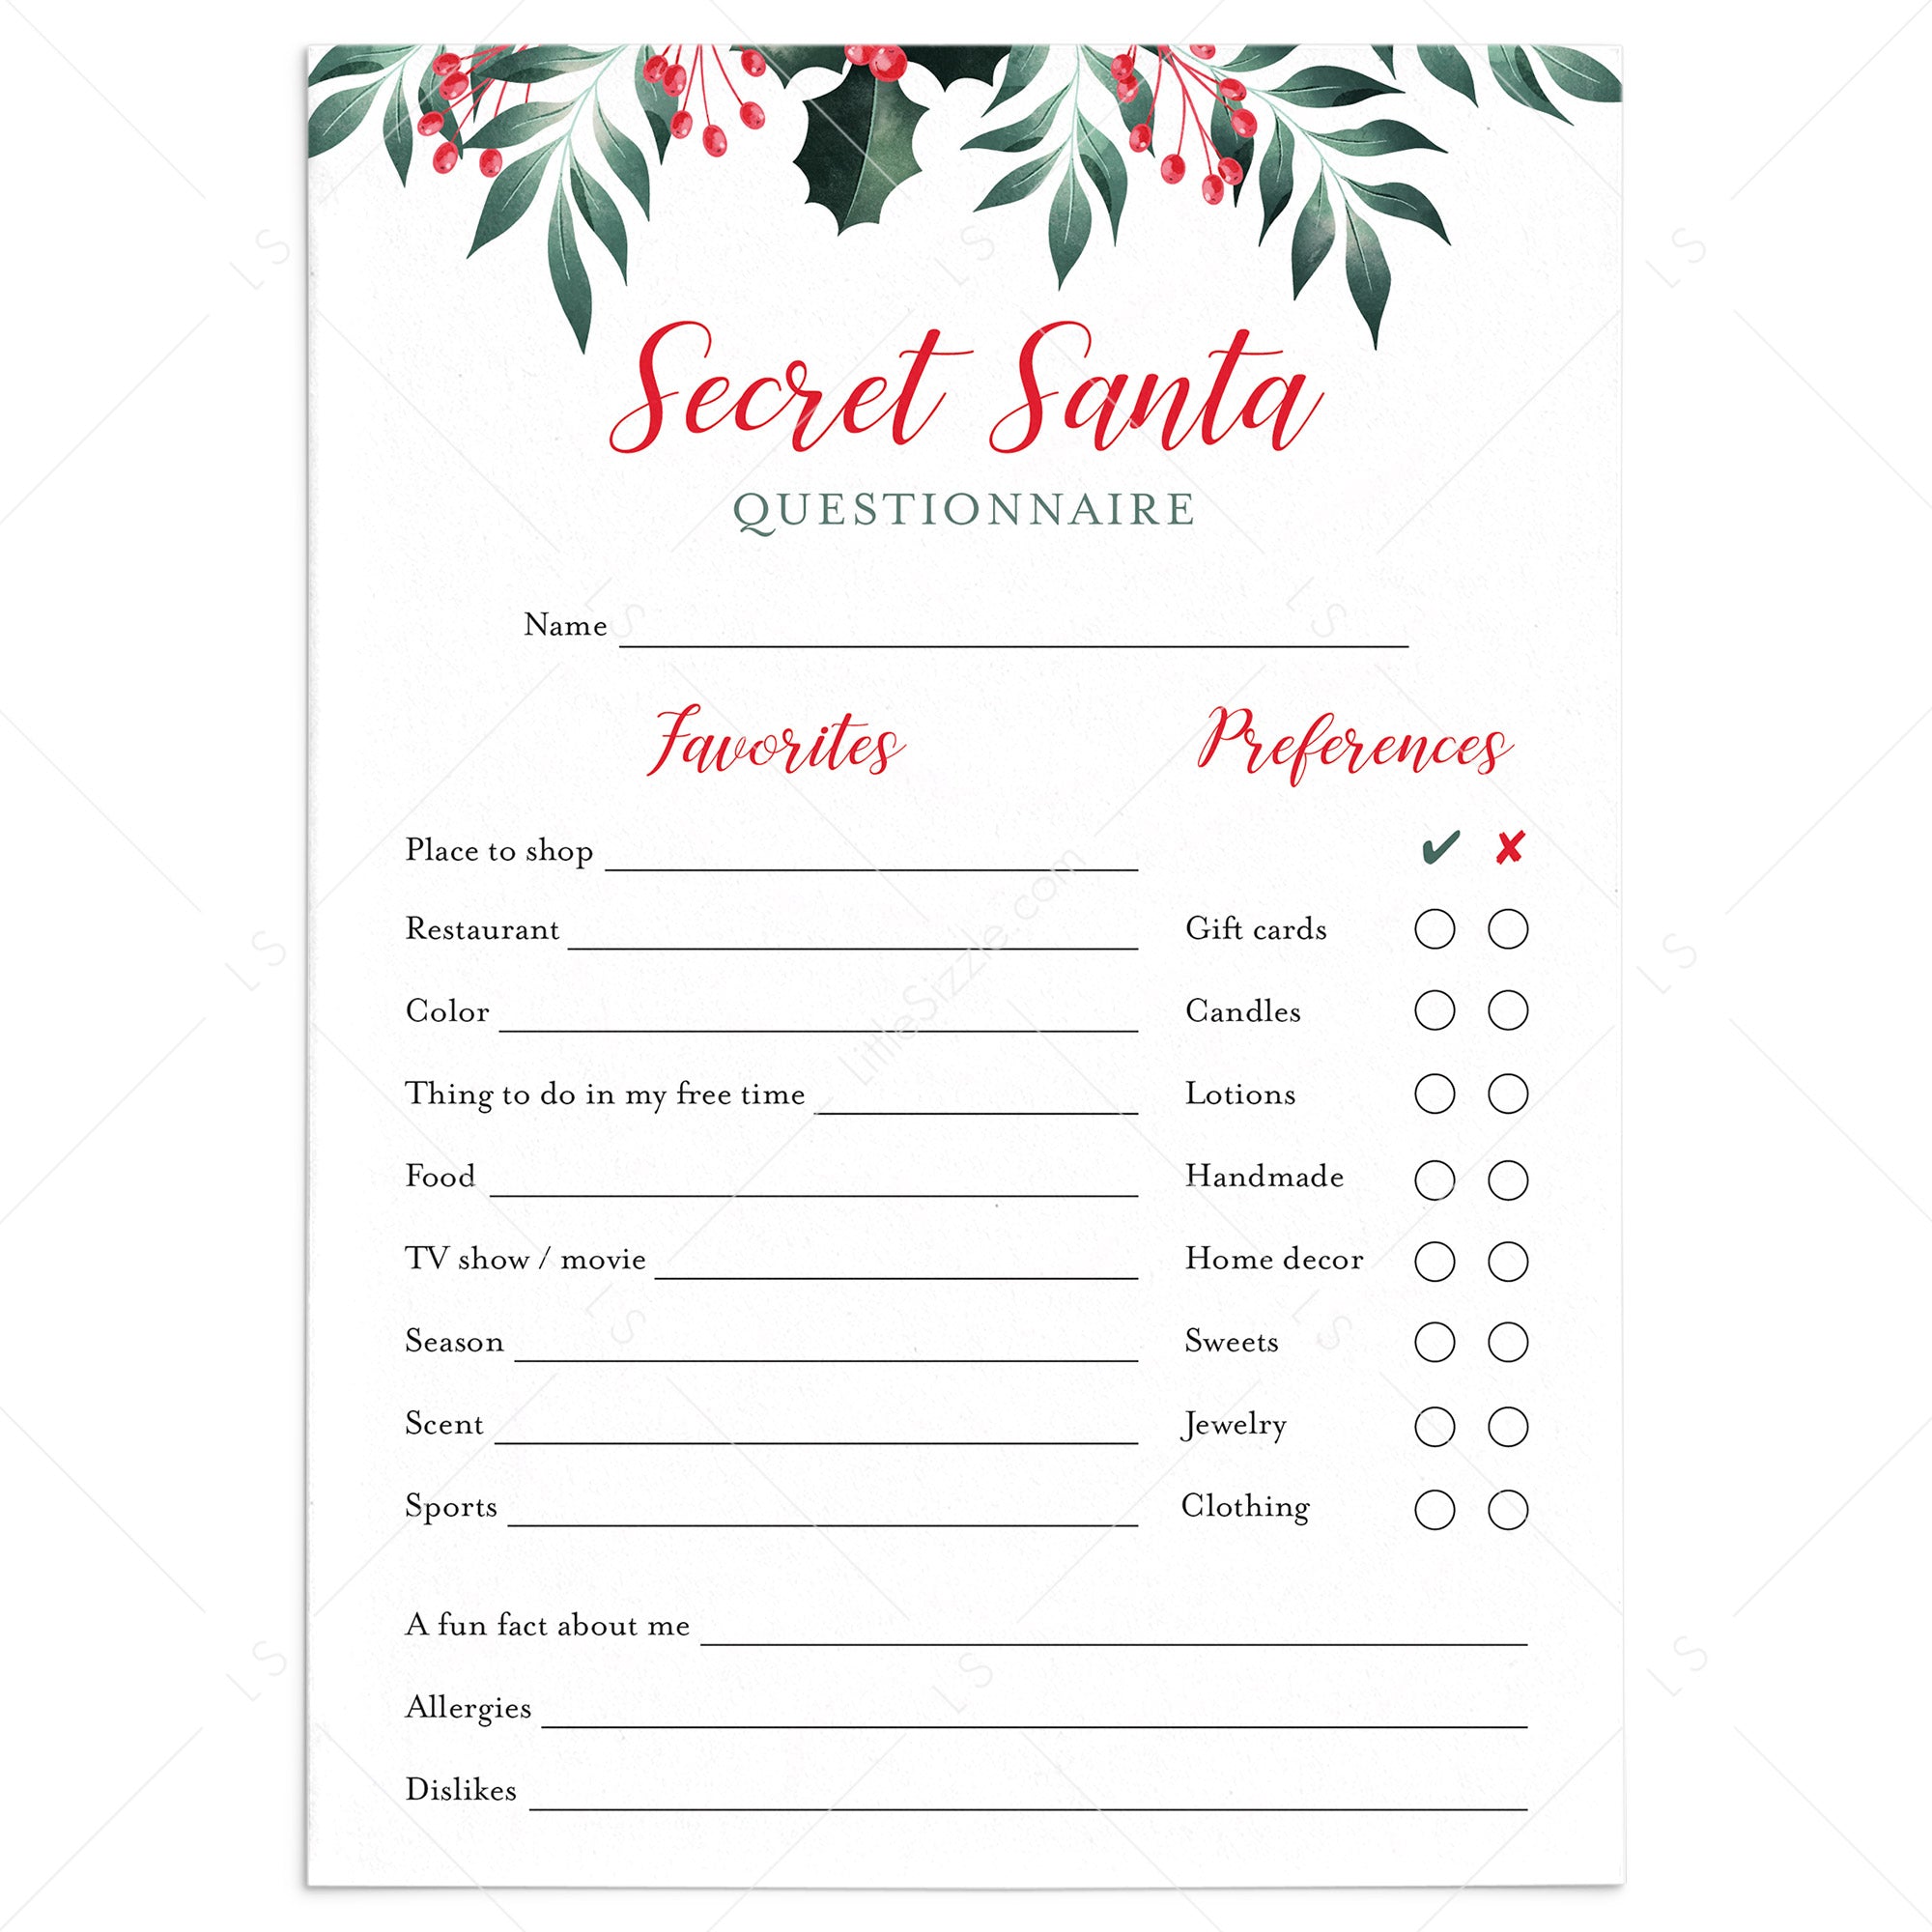 secret-santa-questionnaire-for-gift-exchange-printable